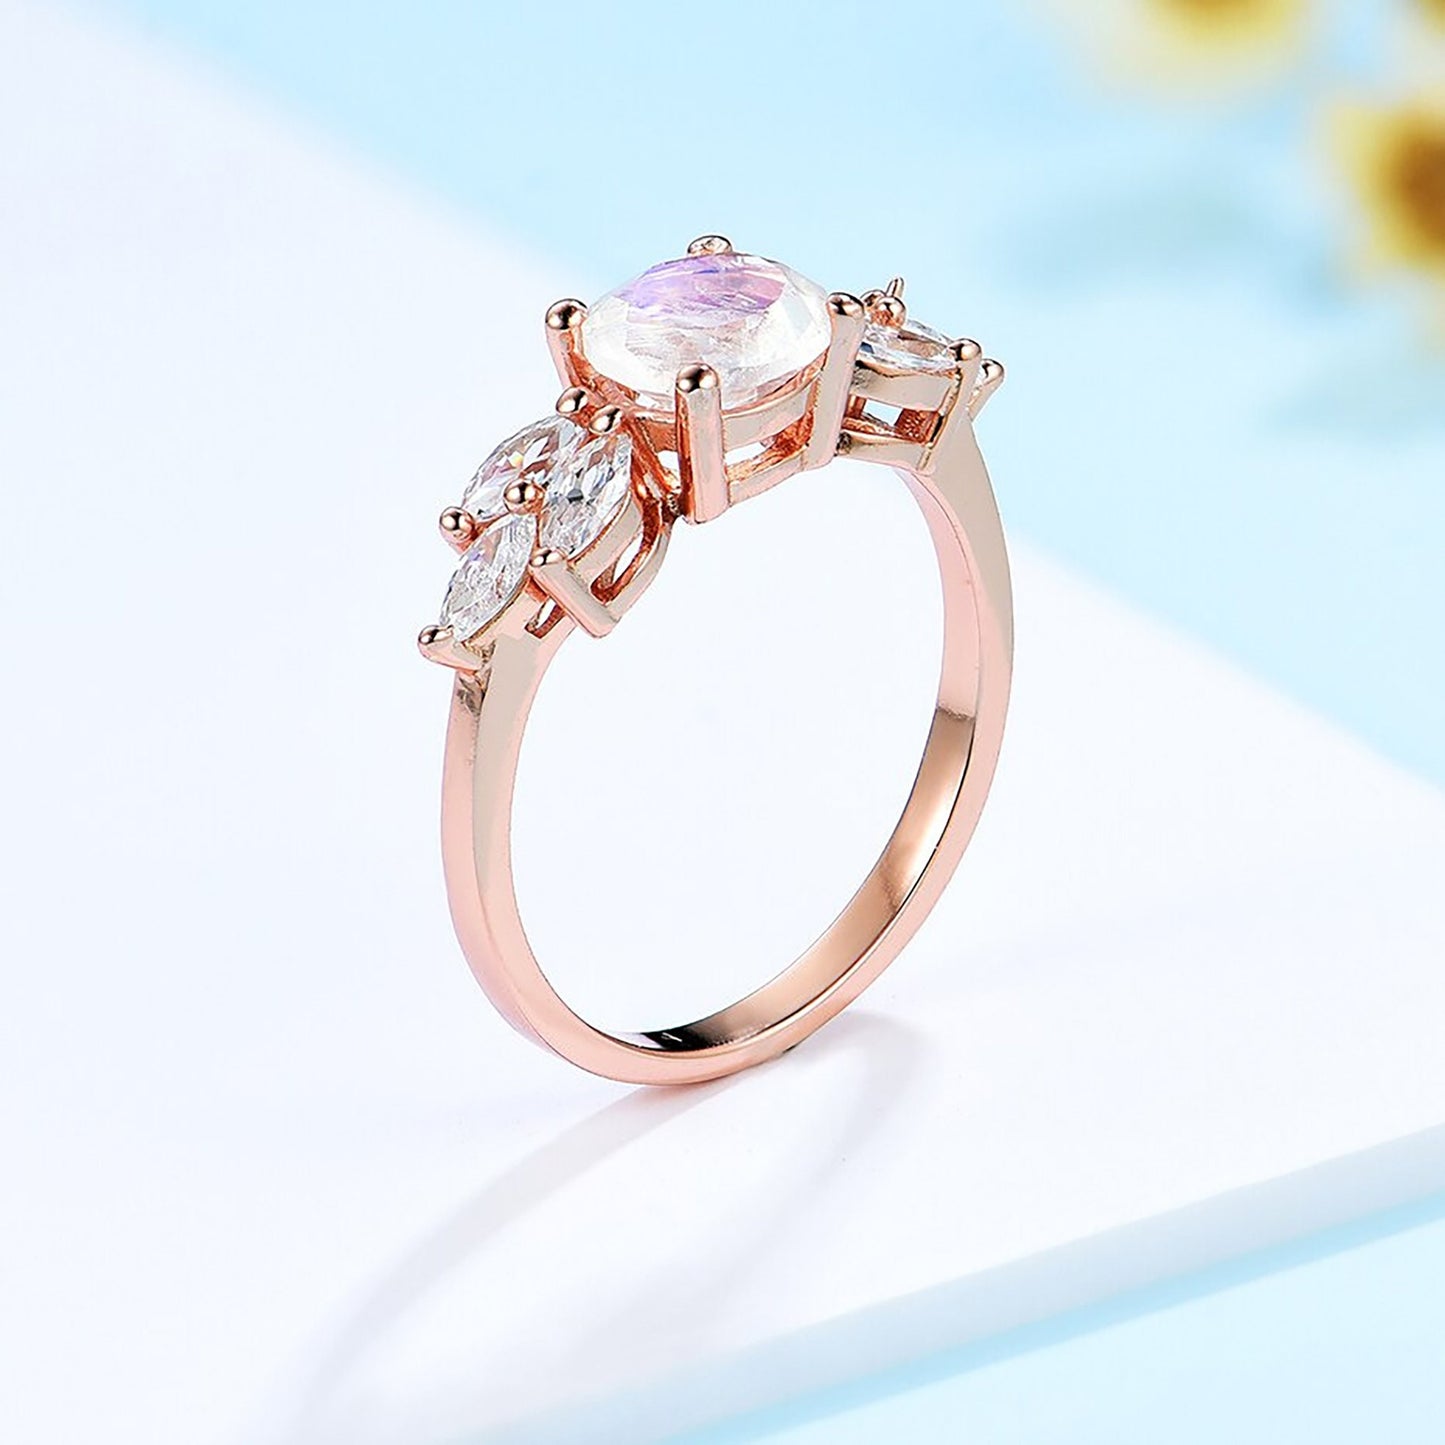 Rose Gold Moonstone Ring \ Natural Moonstone Ring \ Gold Gemstone Ring \ 925 Sterling Silver \ Engagement Ring